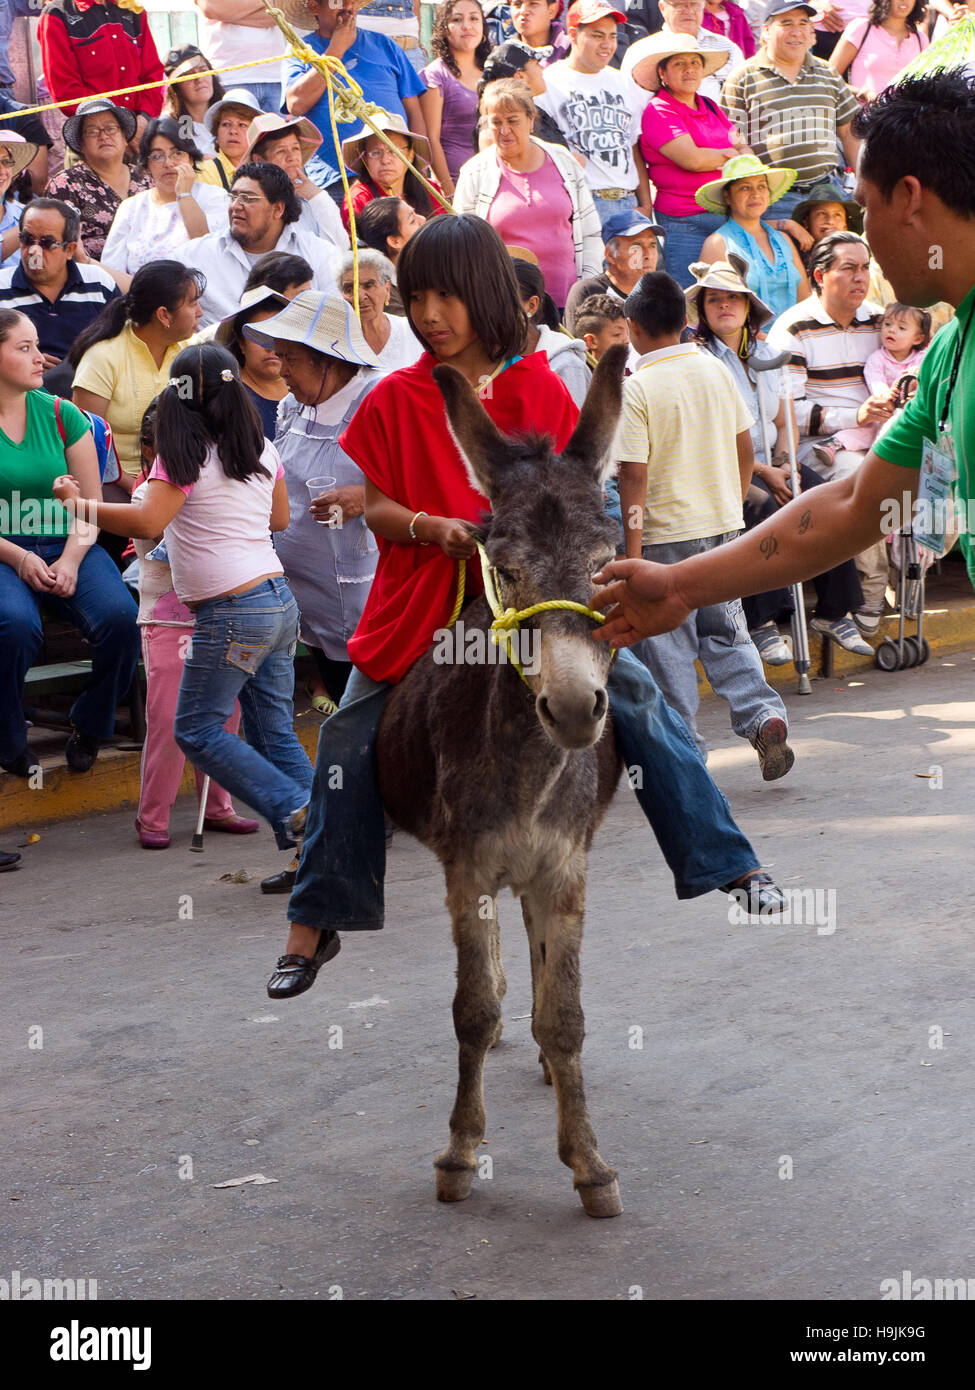 Child riding a donkey during the Donkey fair (Feria del burro) in Otumba, Mexico Stock Photo